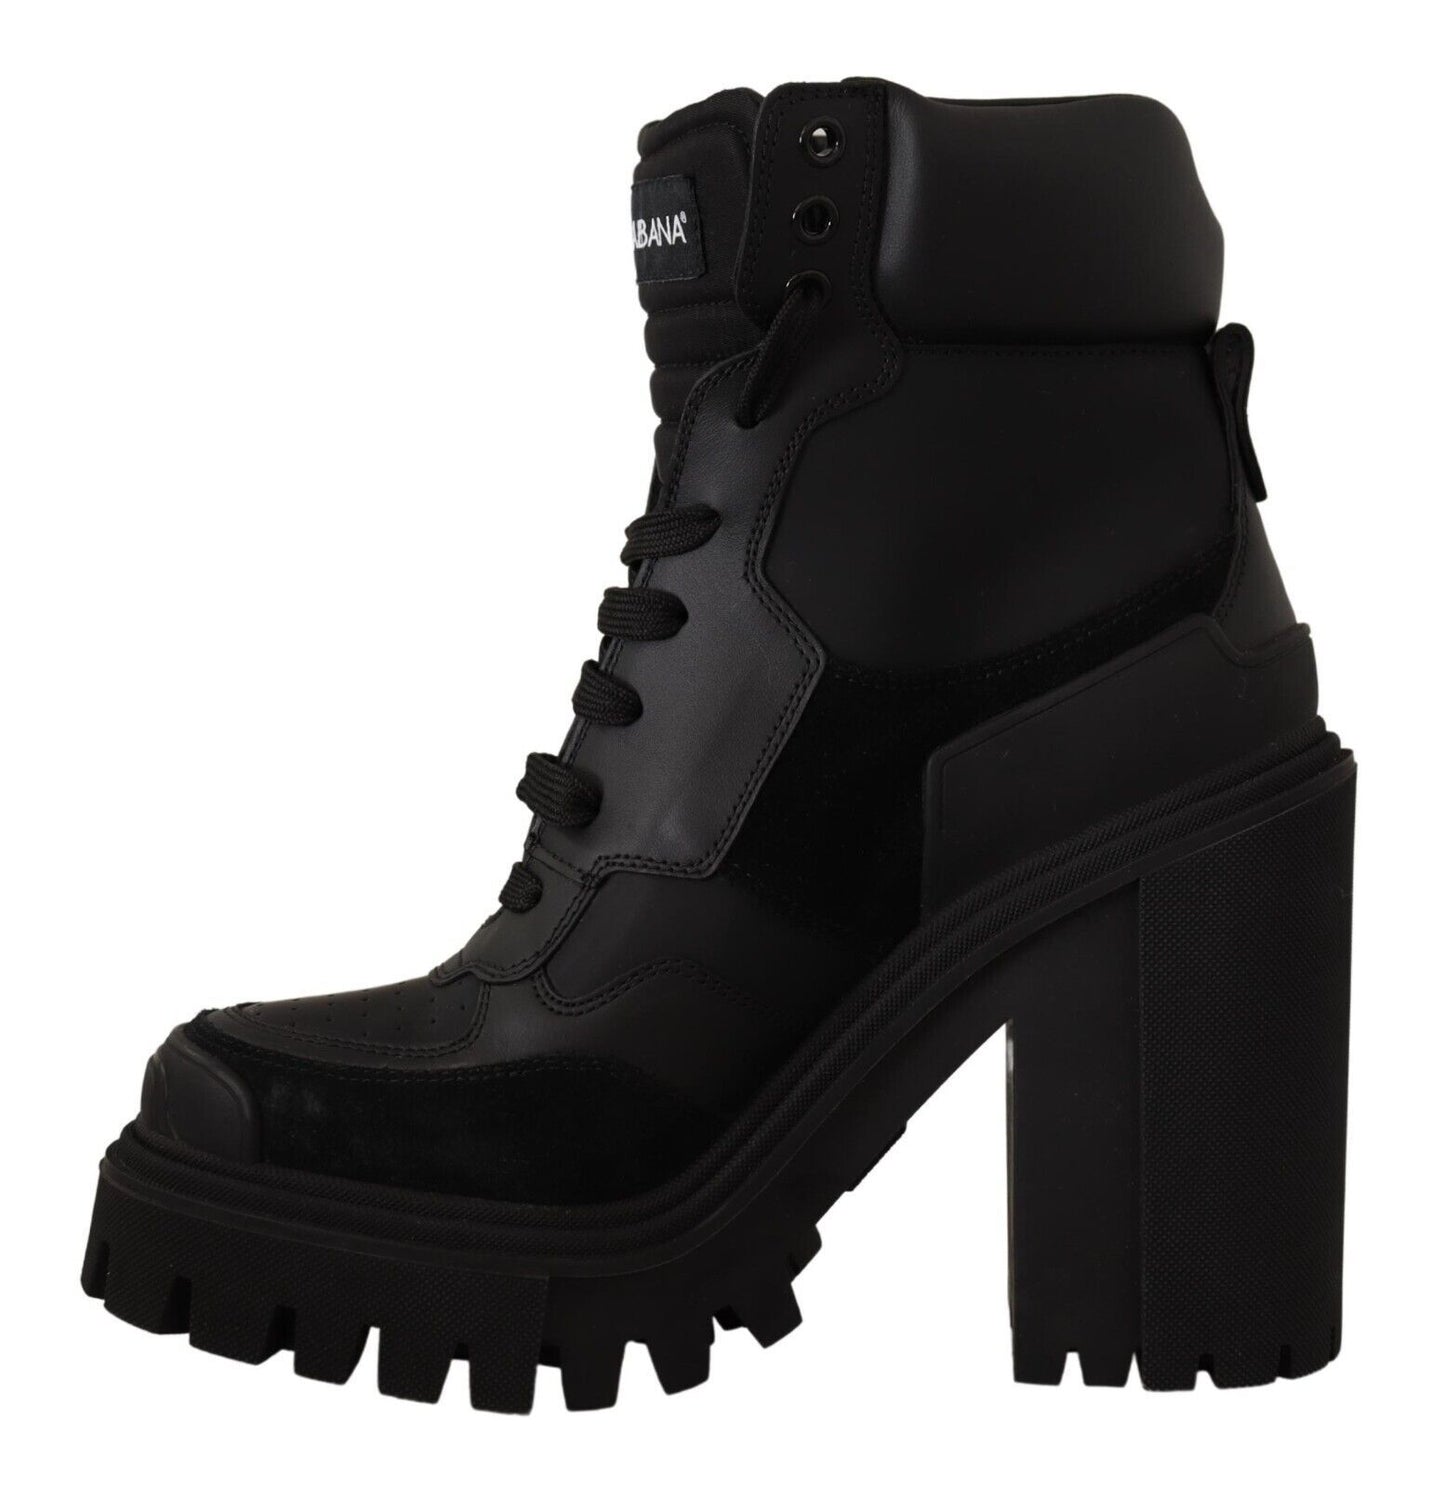 Elegant Black Leather Mid Calf Boots